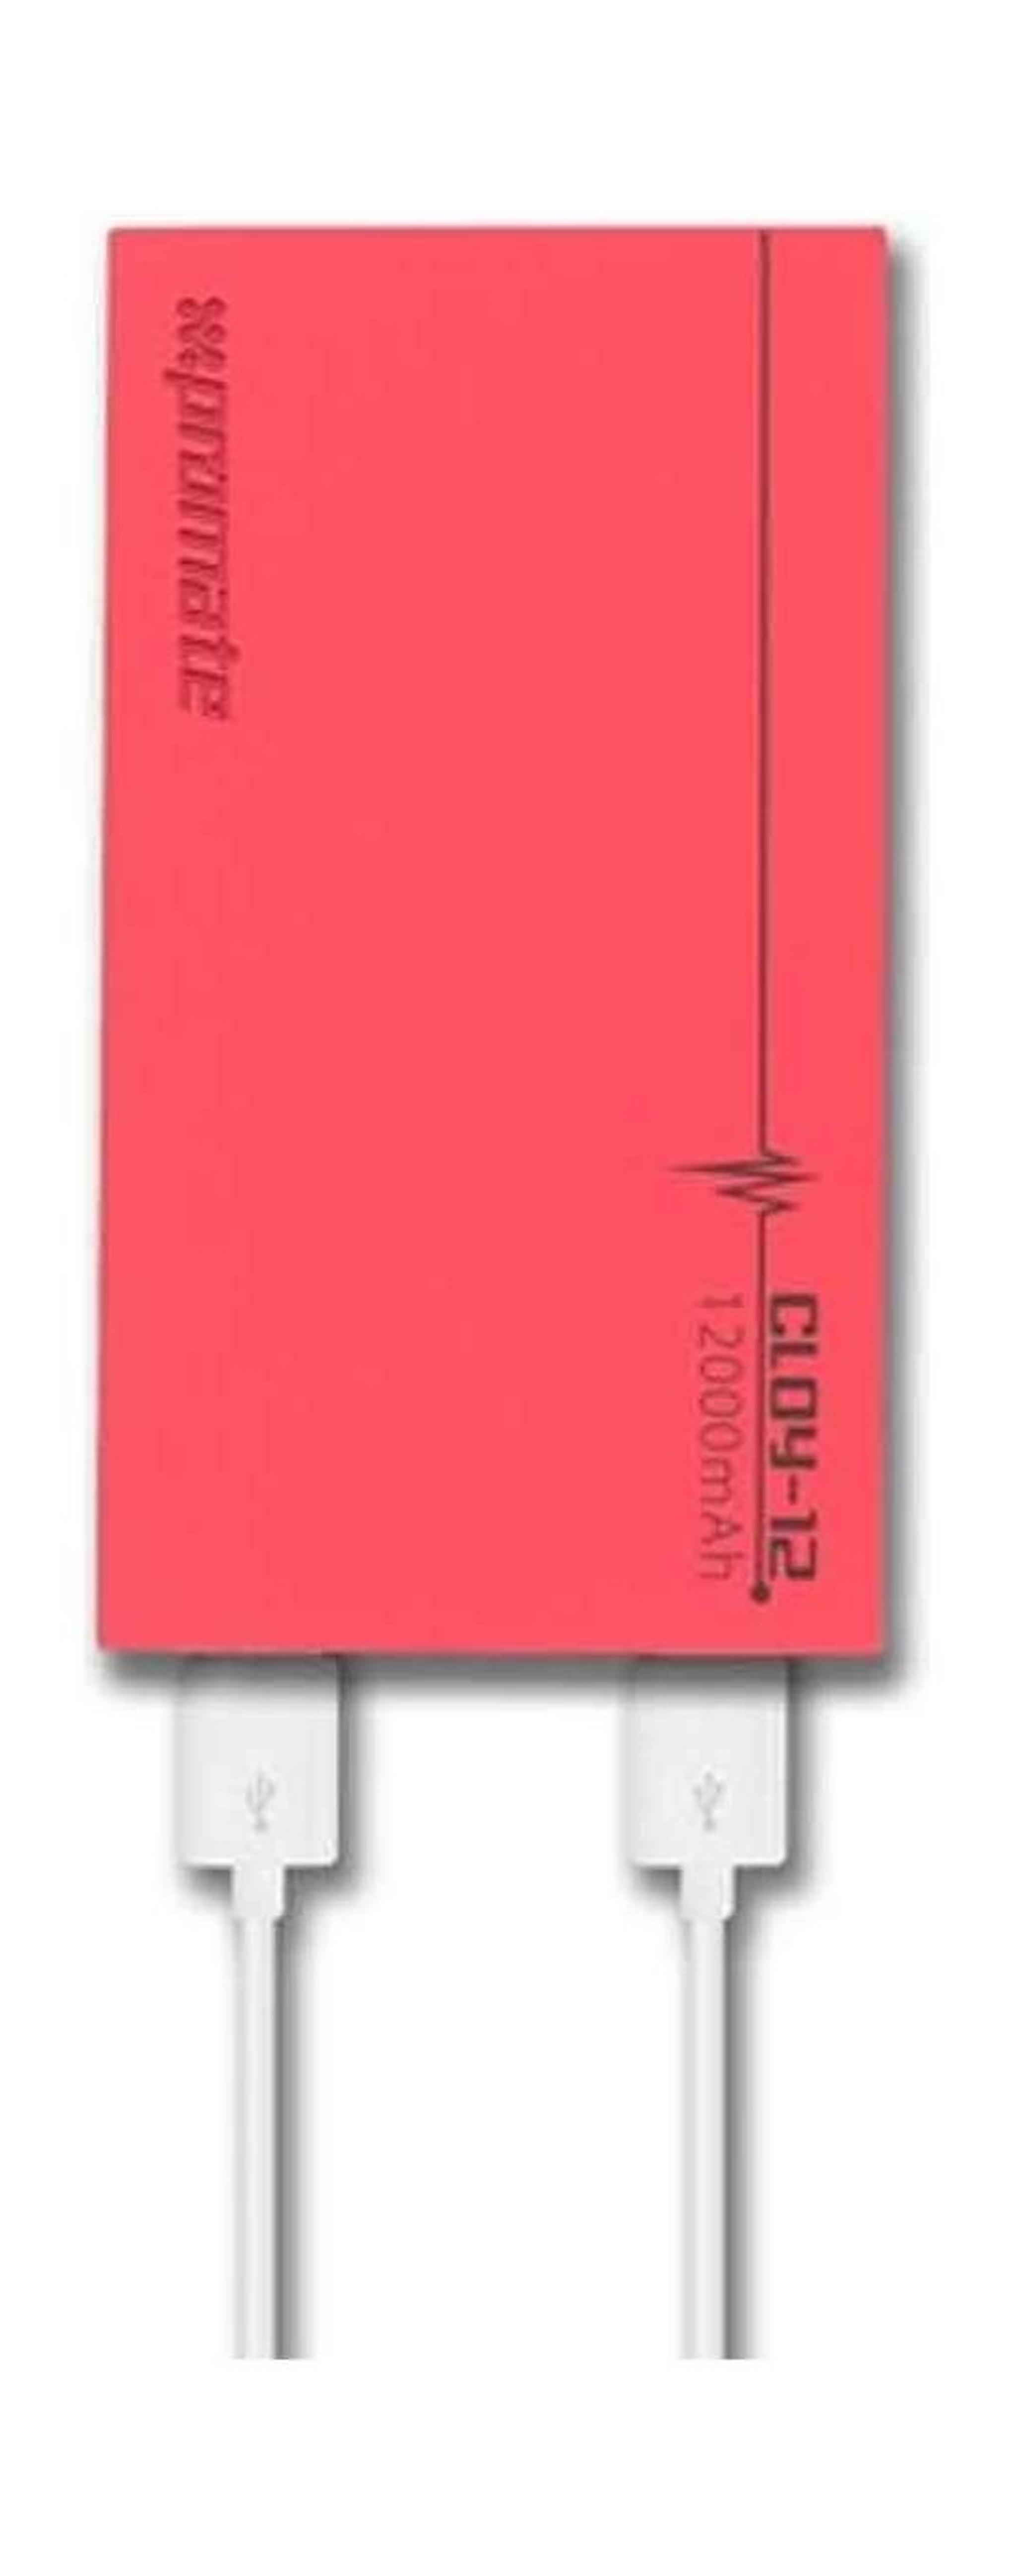 Promate Cloy-12 Premium Dual USB 12000mAh Power Bank - Pink